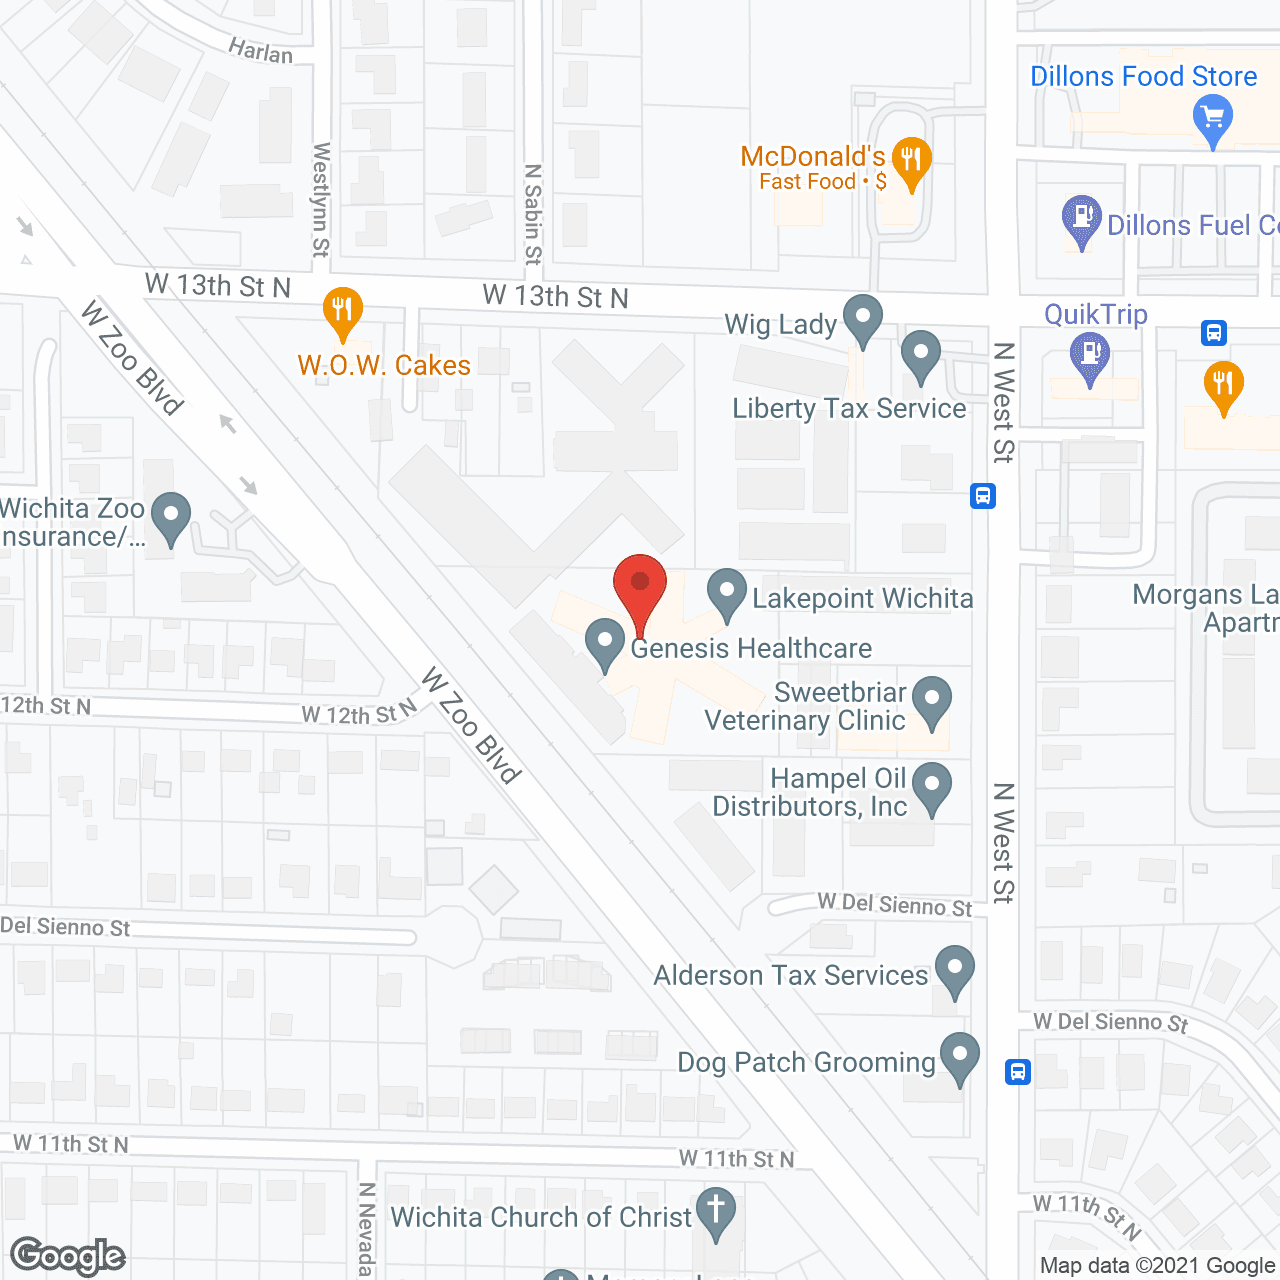 LakePoint Wichita in google map